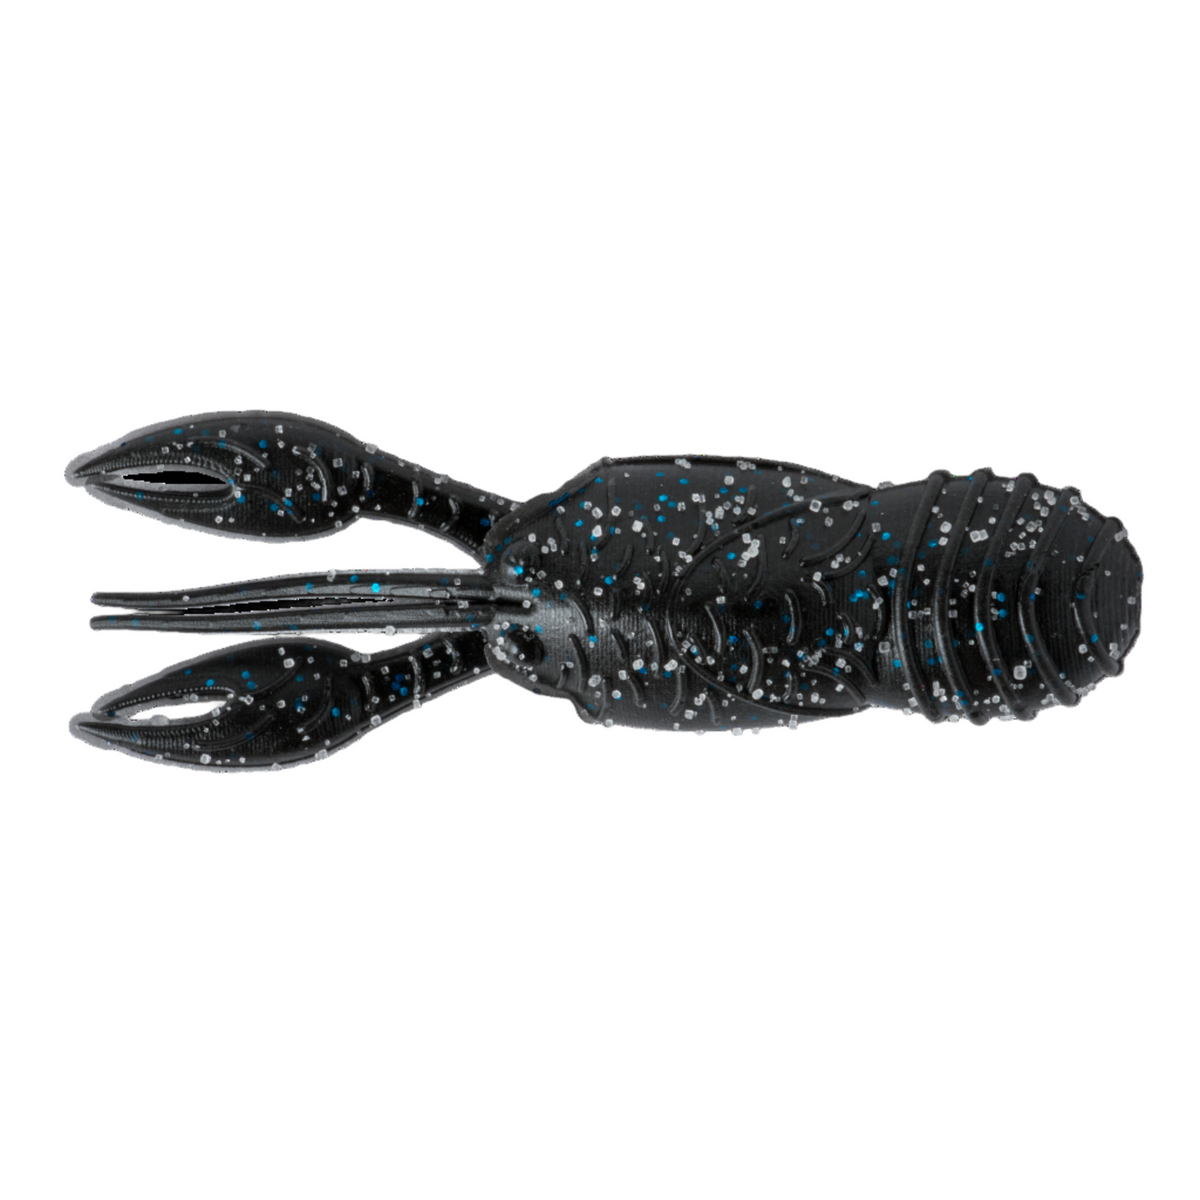  Phat Pak Baits - Beasty Bug Jr Ned Rig Crawfish Finesse Bass  Fishing Lure Soft Plastic 20ct 2.8 - Black n Blue Flake : Sports & Outdoors